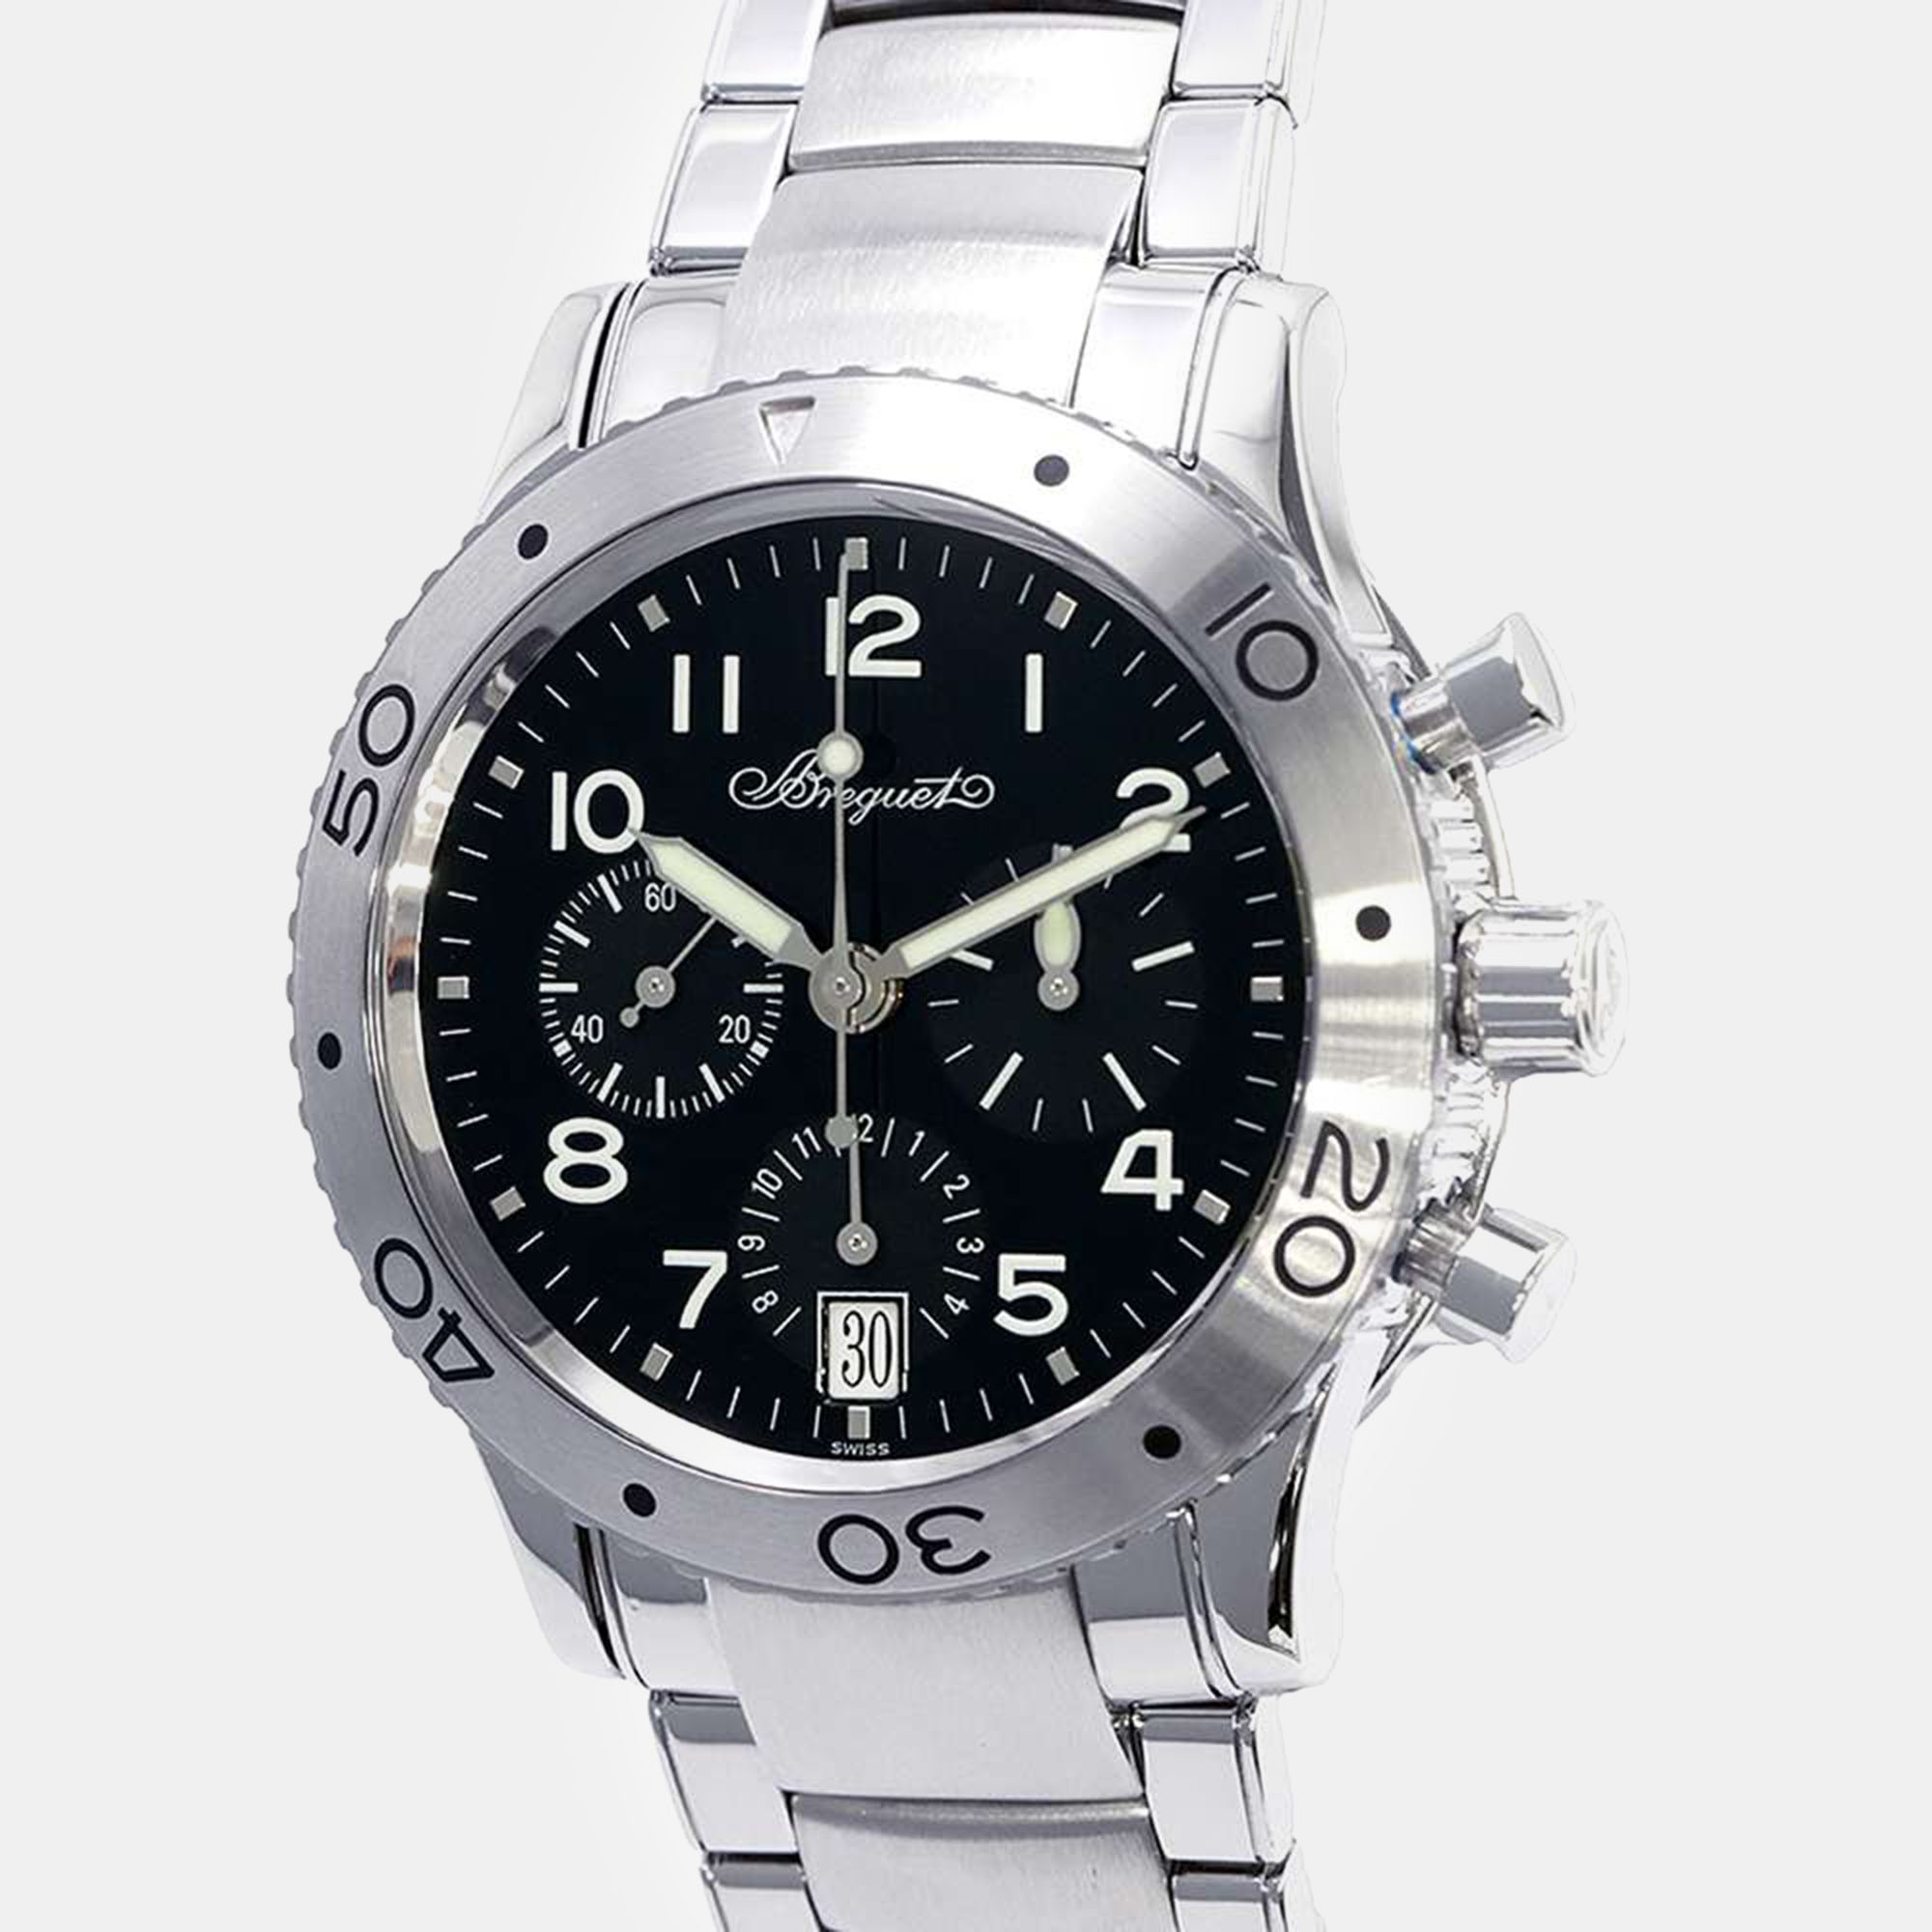 Breguet black stainless steel transaltantique 3820st/h2/sw9 automatic men's wristwatch 39.5 mm